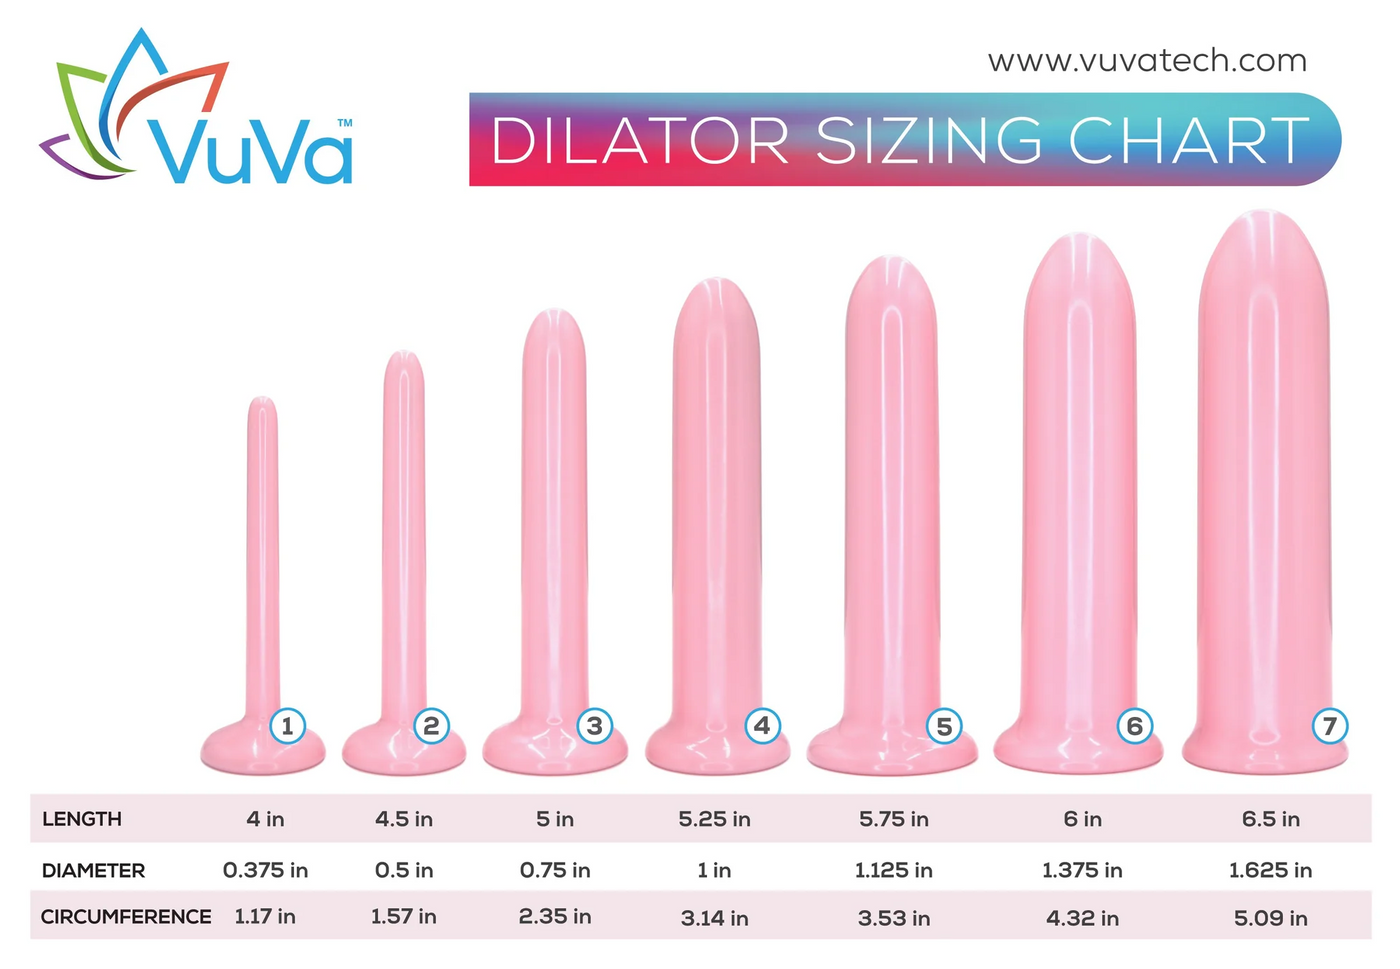 Seven VuVa Smooth Vaginal Dilators